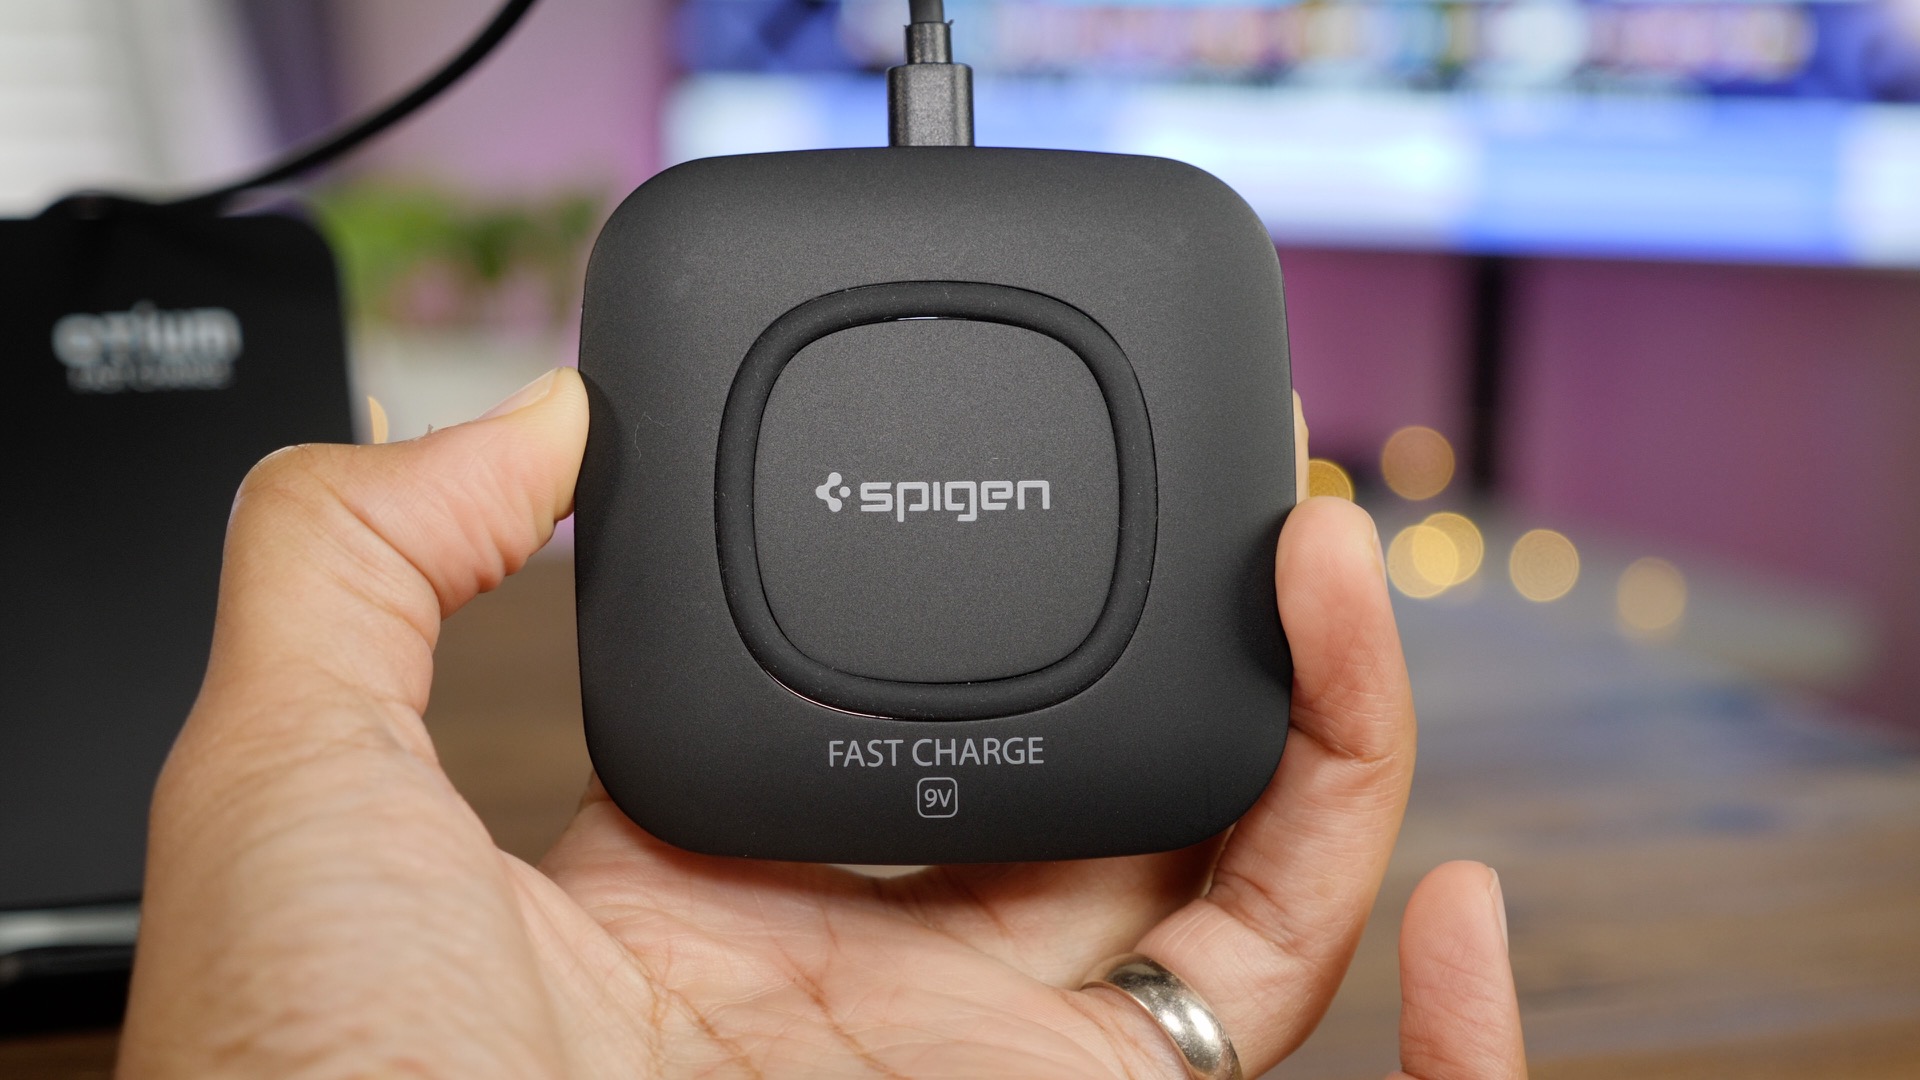 spigen-wireless-charger-iphone-8.jpg?quality=82&strip=all